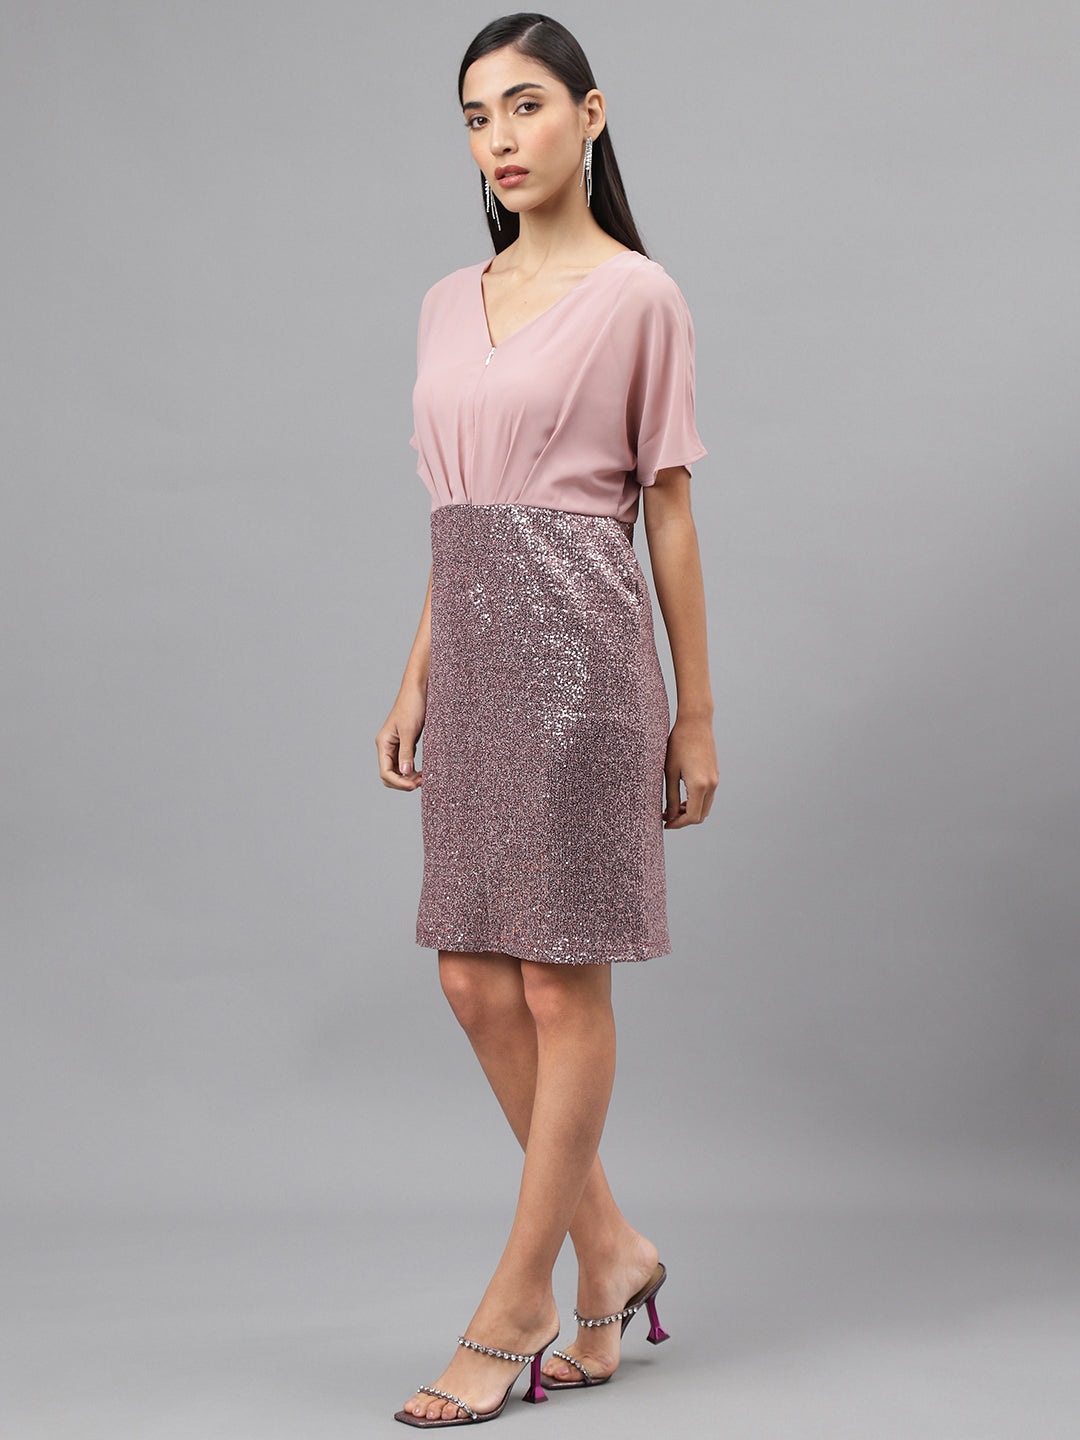 Rosegold Cap Sleeve V-Neck Solid 2 Fir 1 Dress